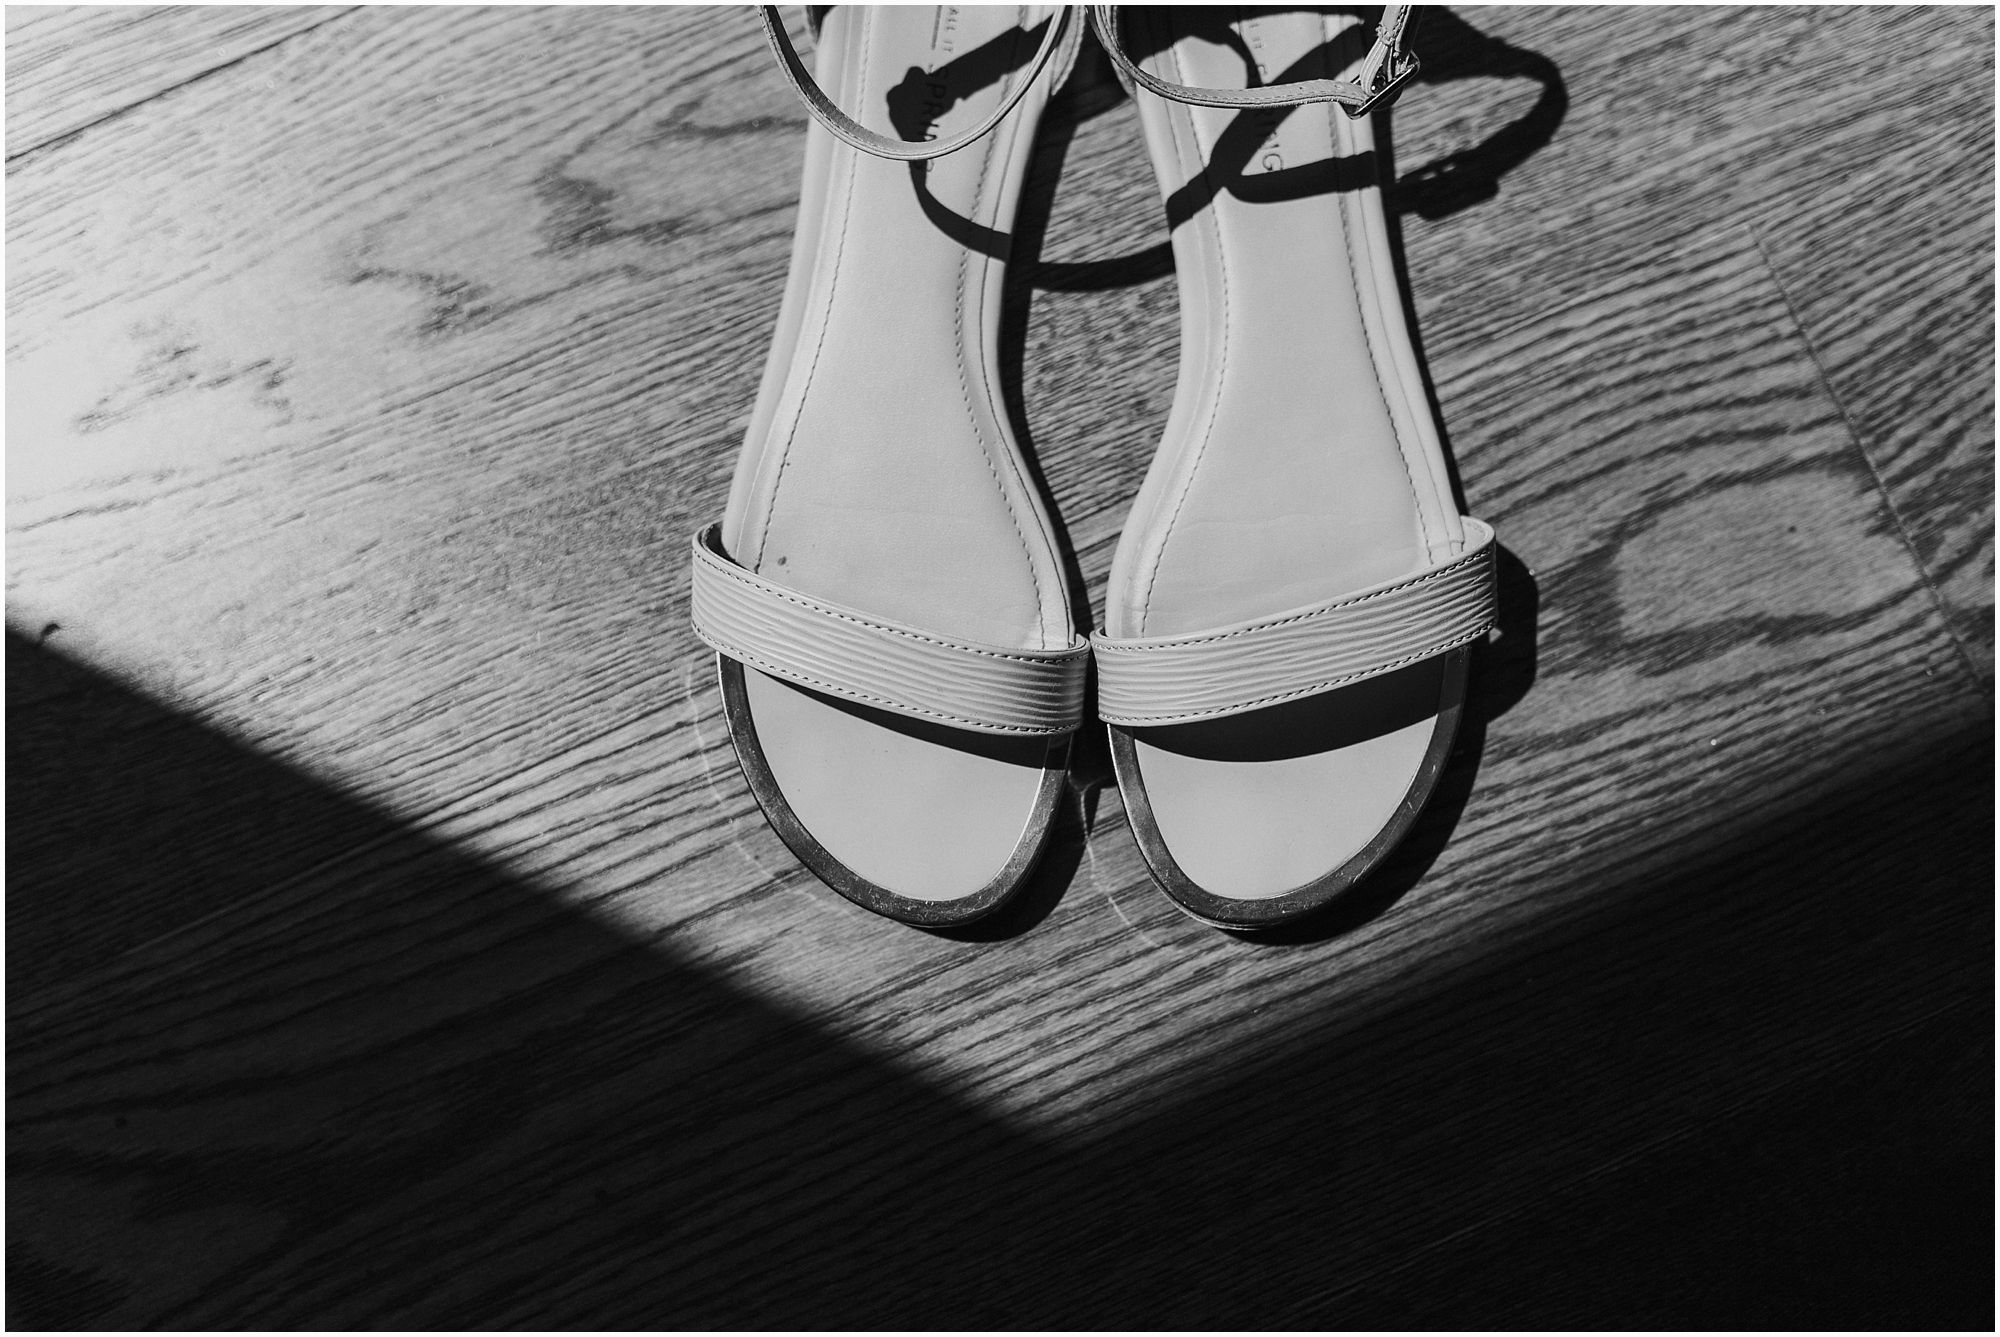 bride's sandals